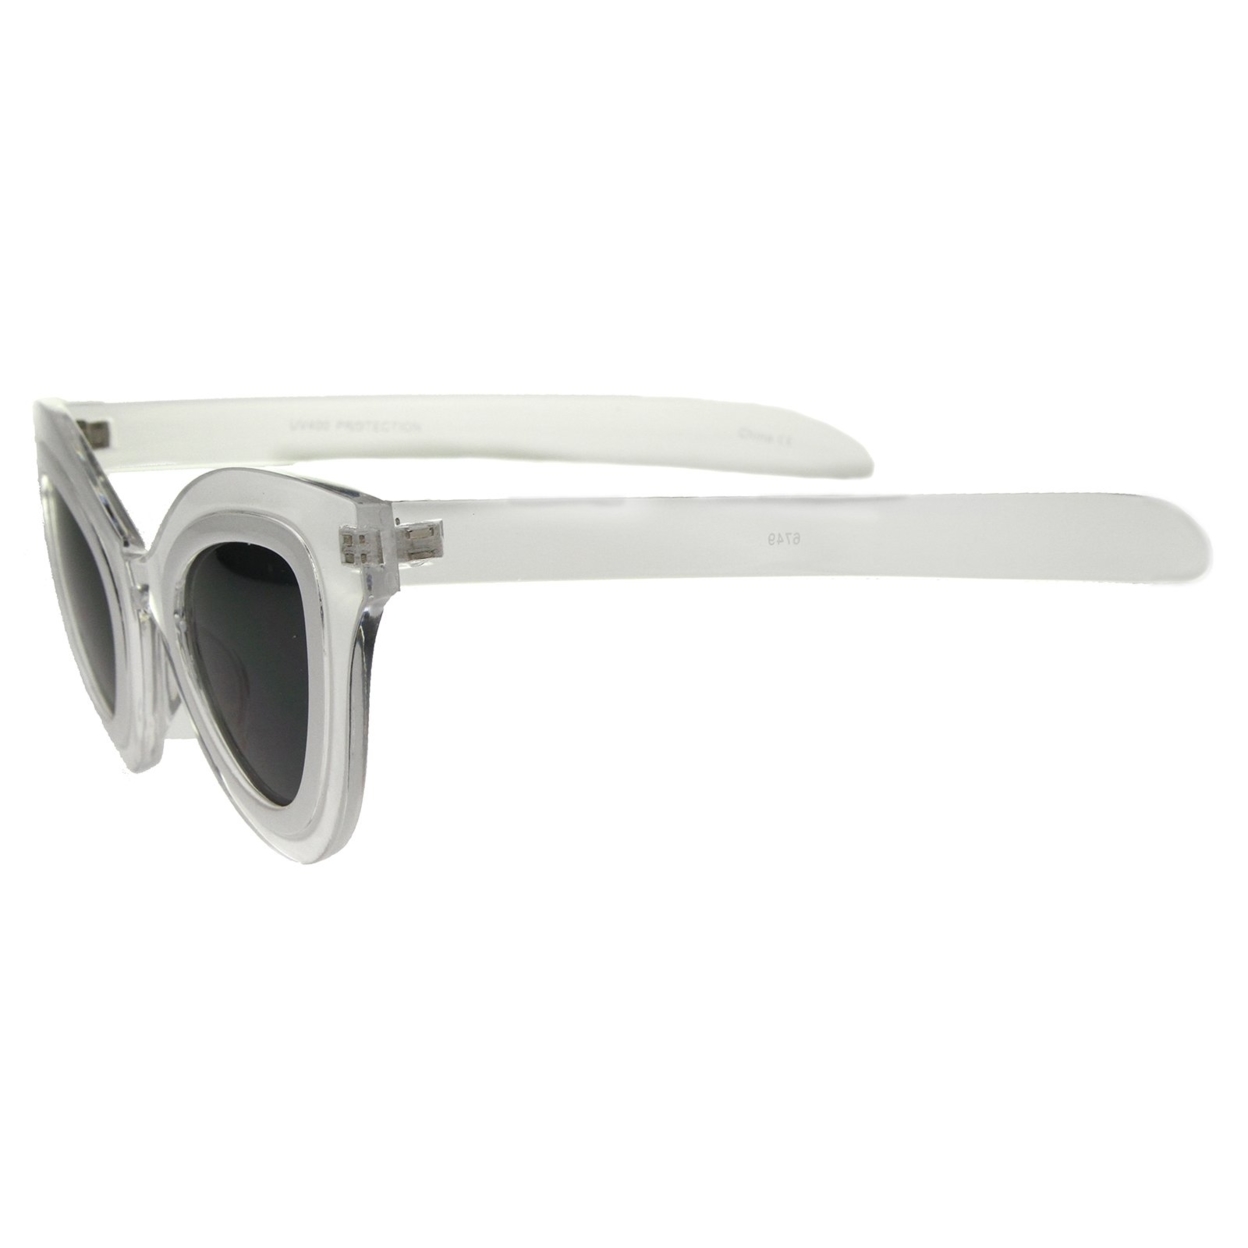 Womens High Fashion Two-Toned Chunky Oversize Cat Eye Sunglasses 42mm - Shiny Black-White/Smoke